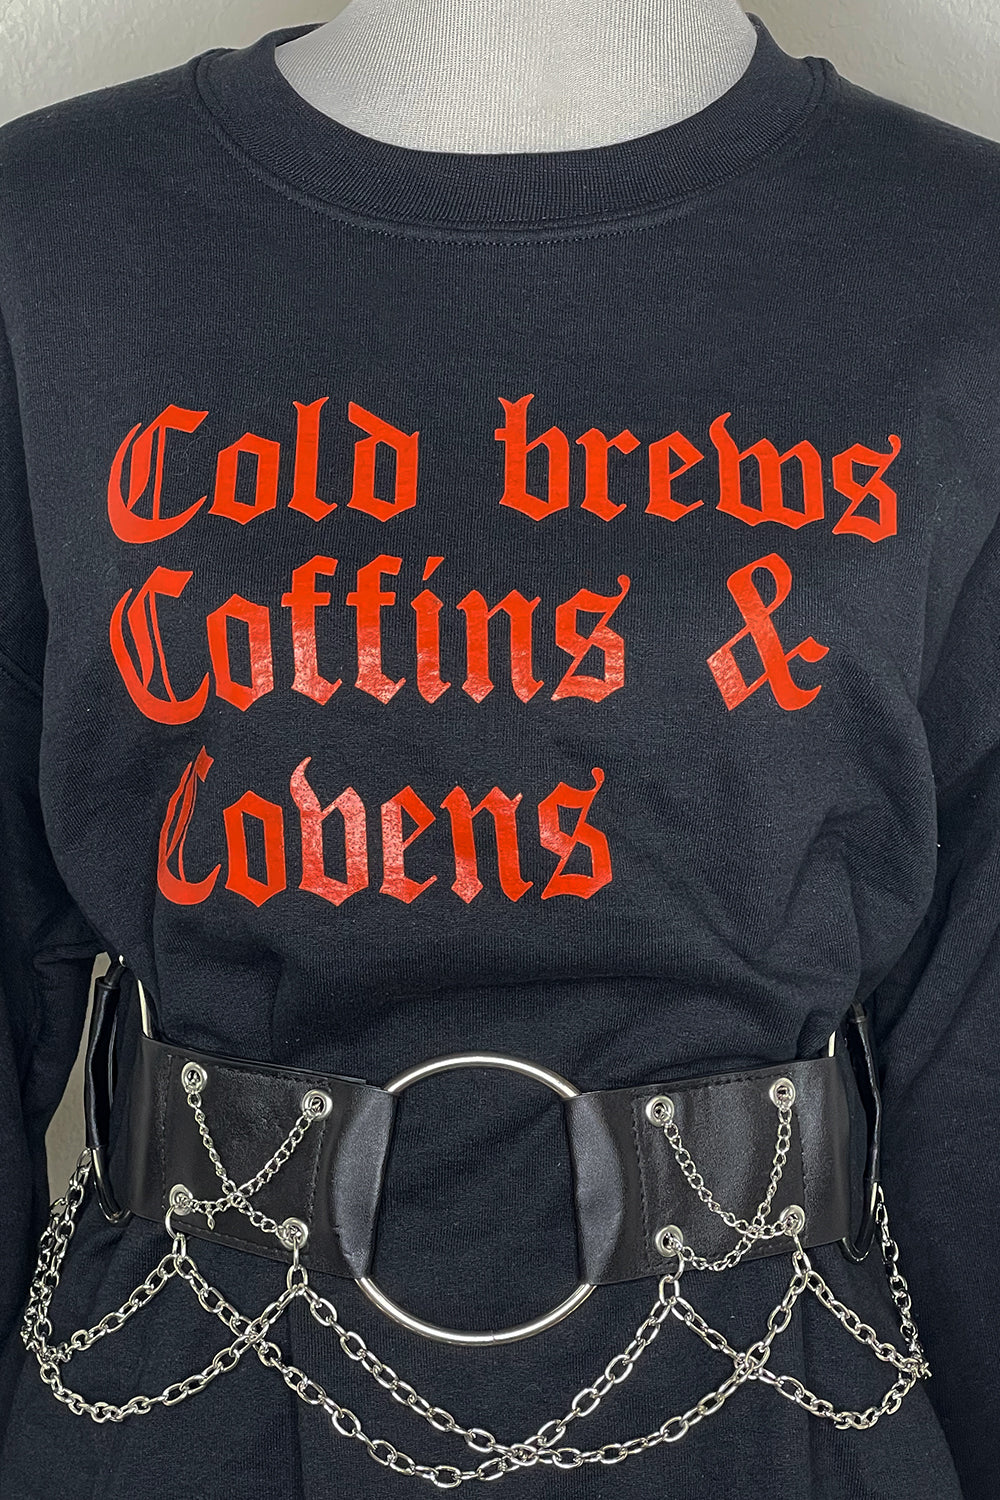 Cold Brews, Coffins & Covens Sweatshirt